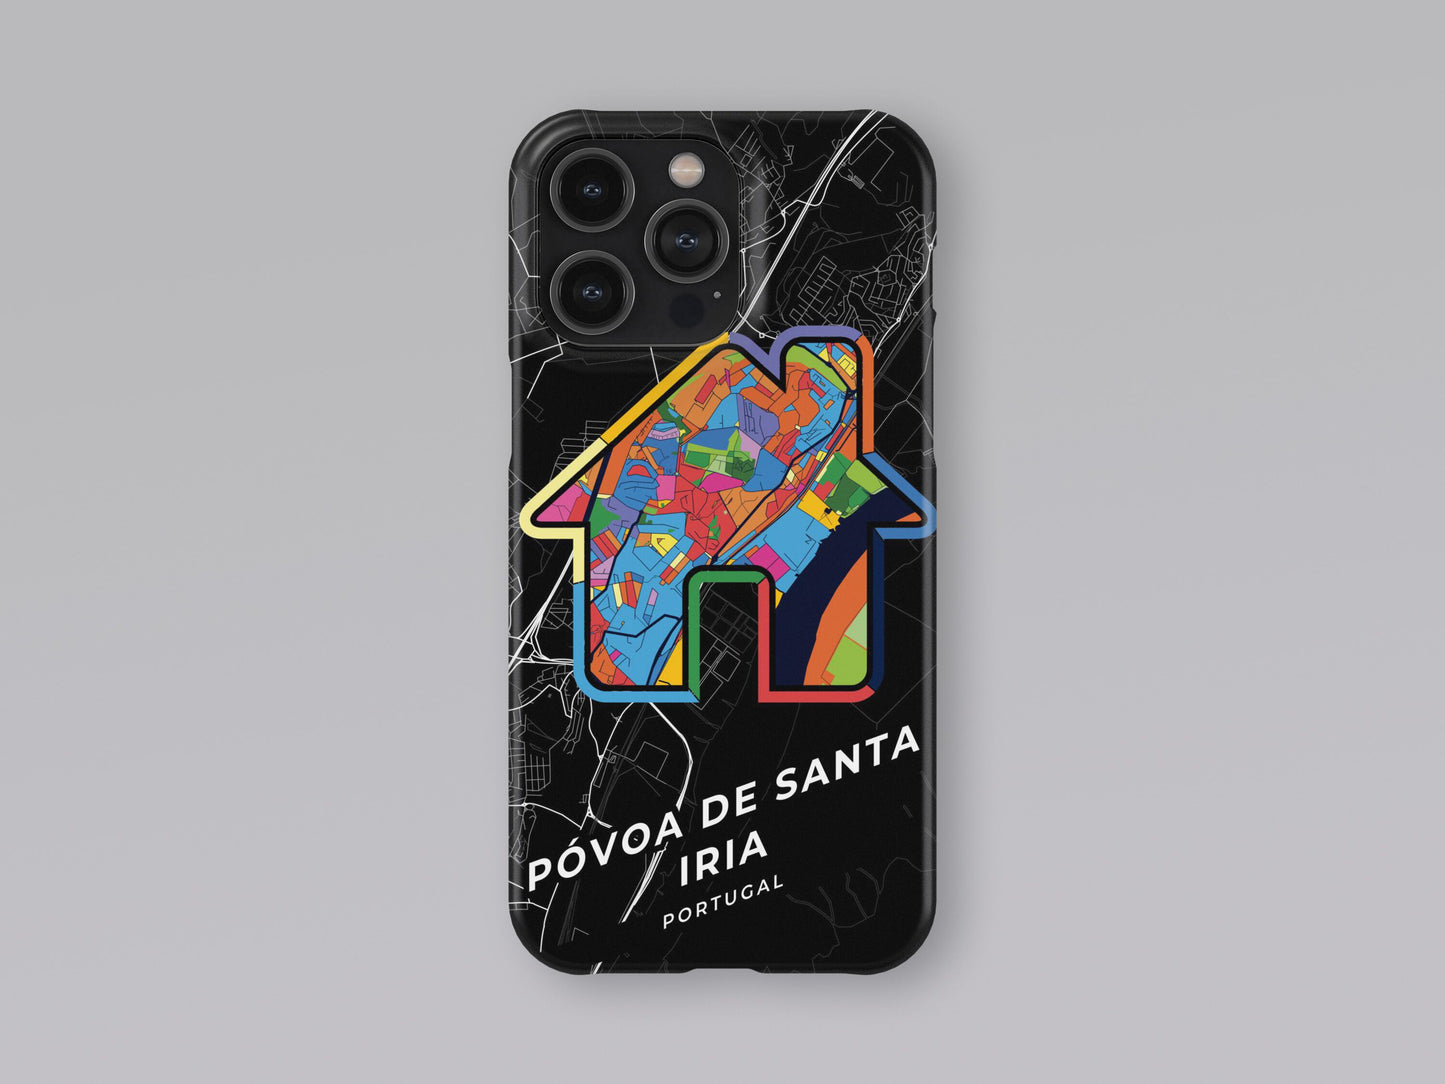 Póvoa De Santa Iria Portugal slim phone case with colorful icon. Birthday, wedding or housewarming gift. Couple match cases. 3